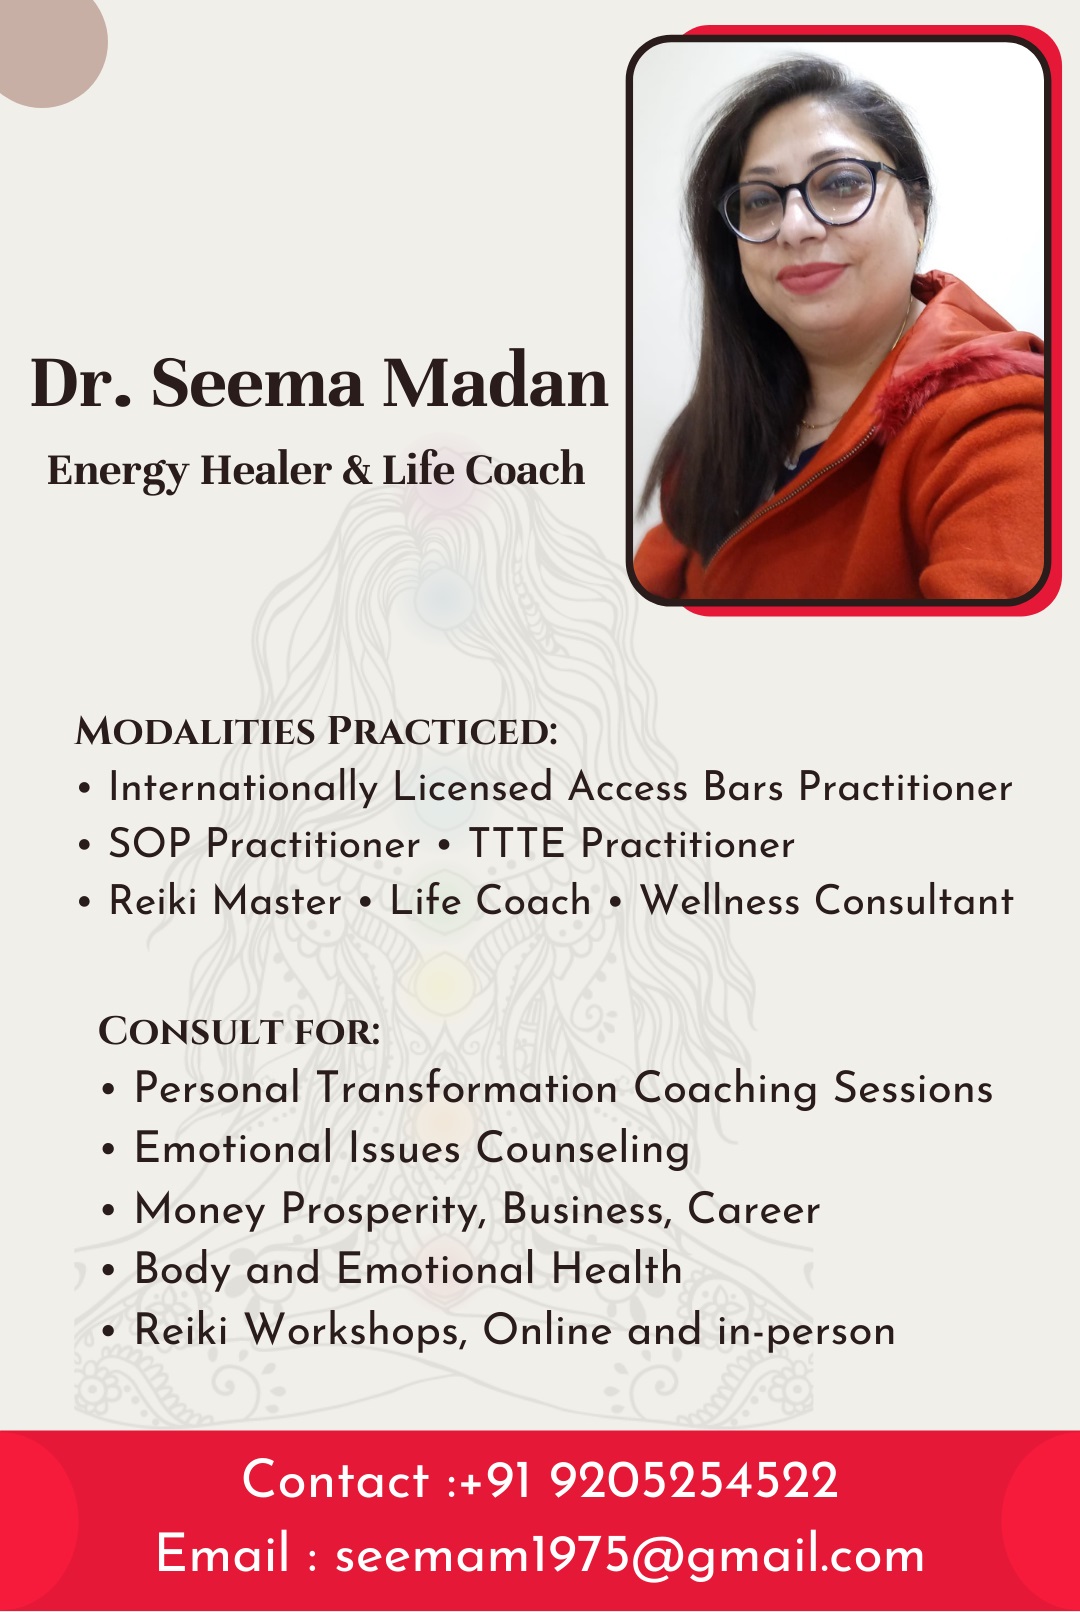 Dr. Seema Madan - Energy Healer & Life Coach - Ludhiana